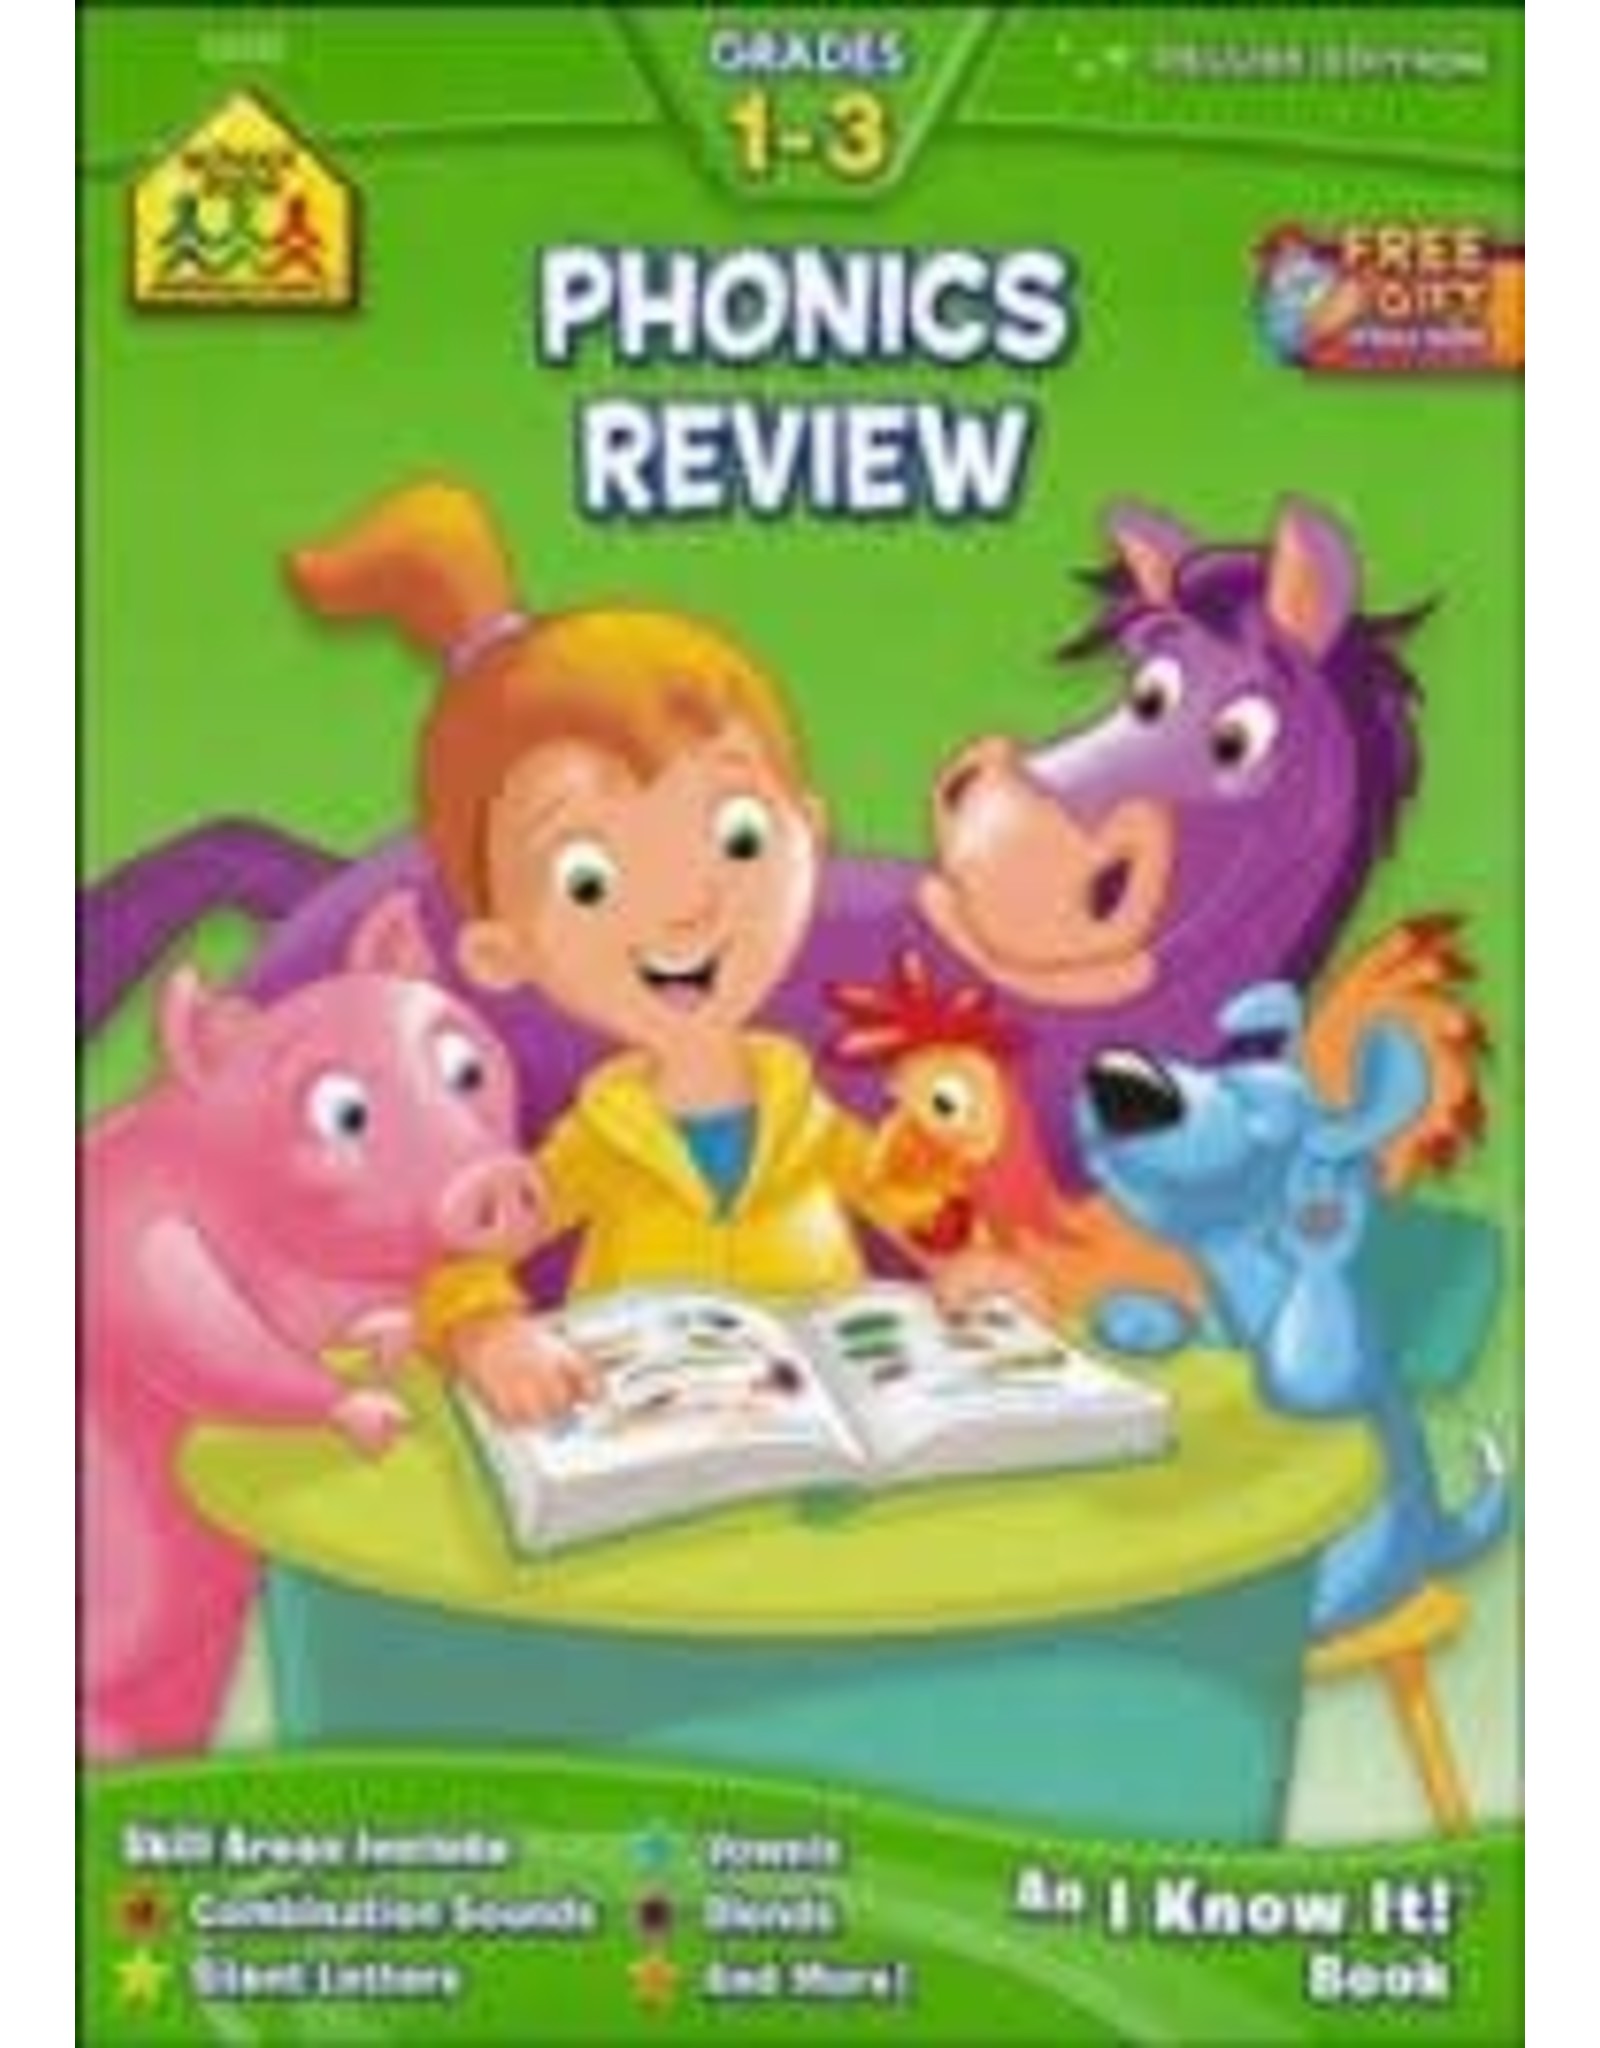 Phonics Review grade 1-3